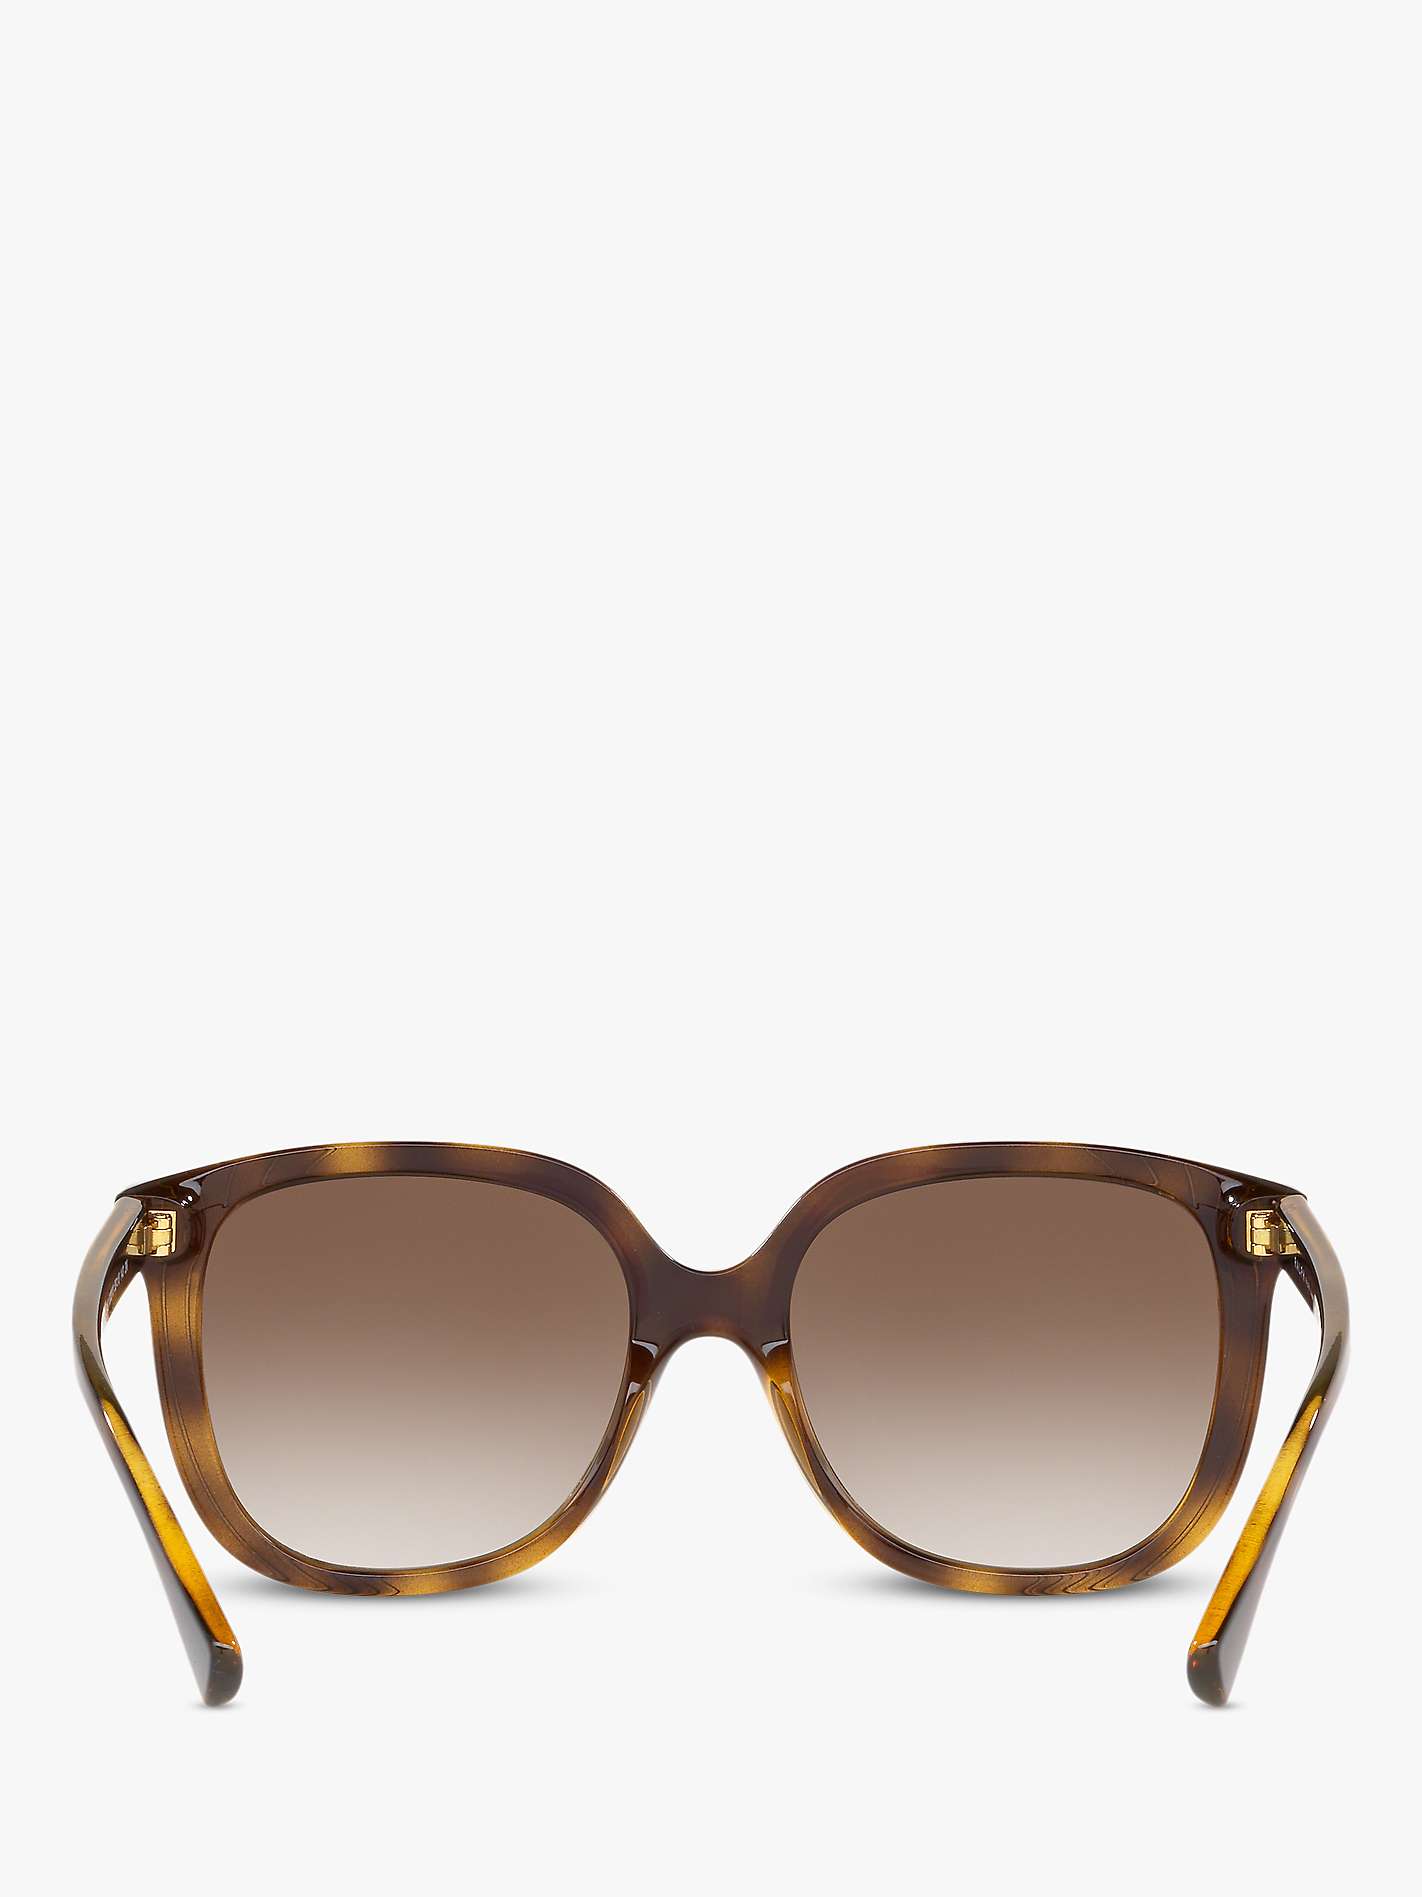 Buy Ralph RA5257 Women's Square Sunglasses Online at johnlewis.com